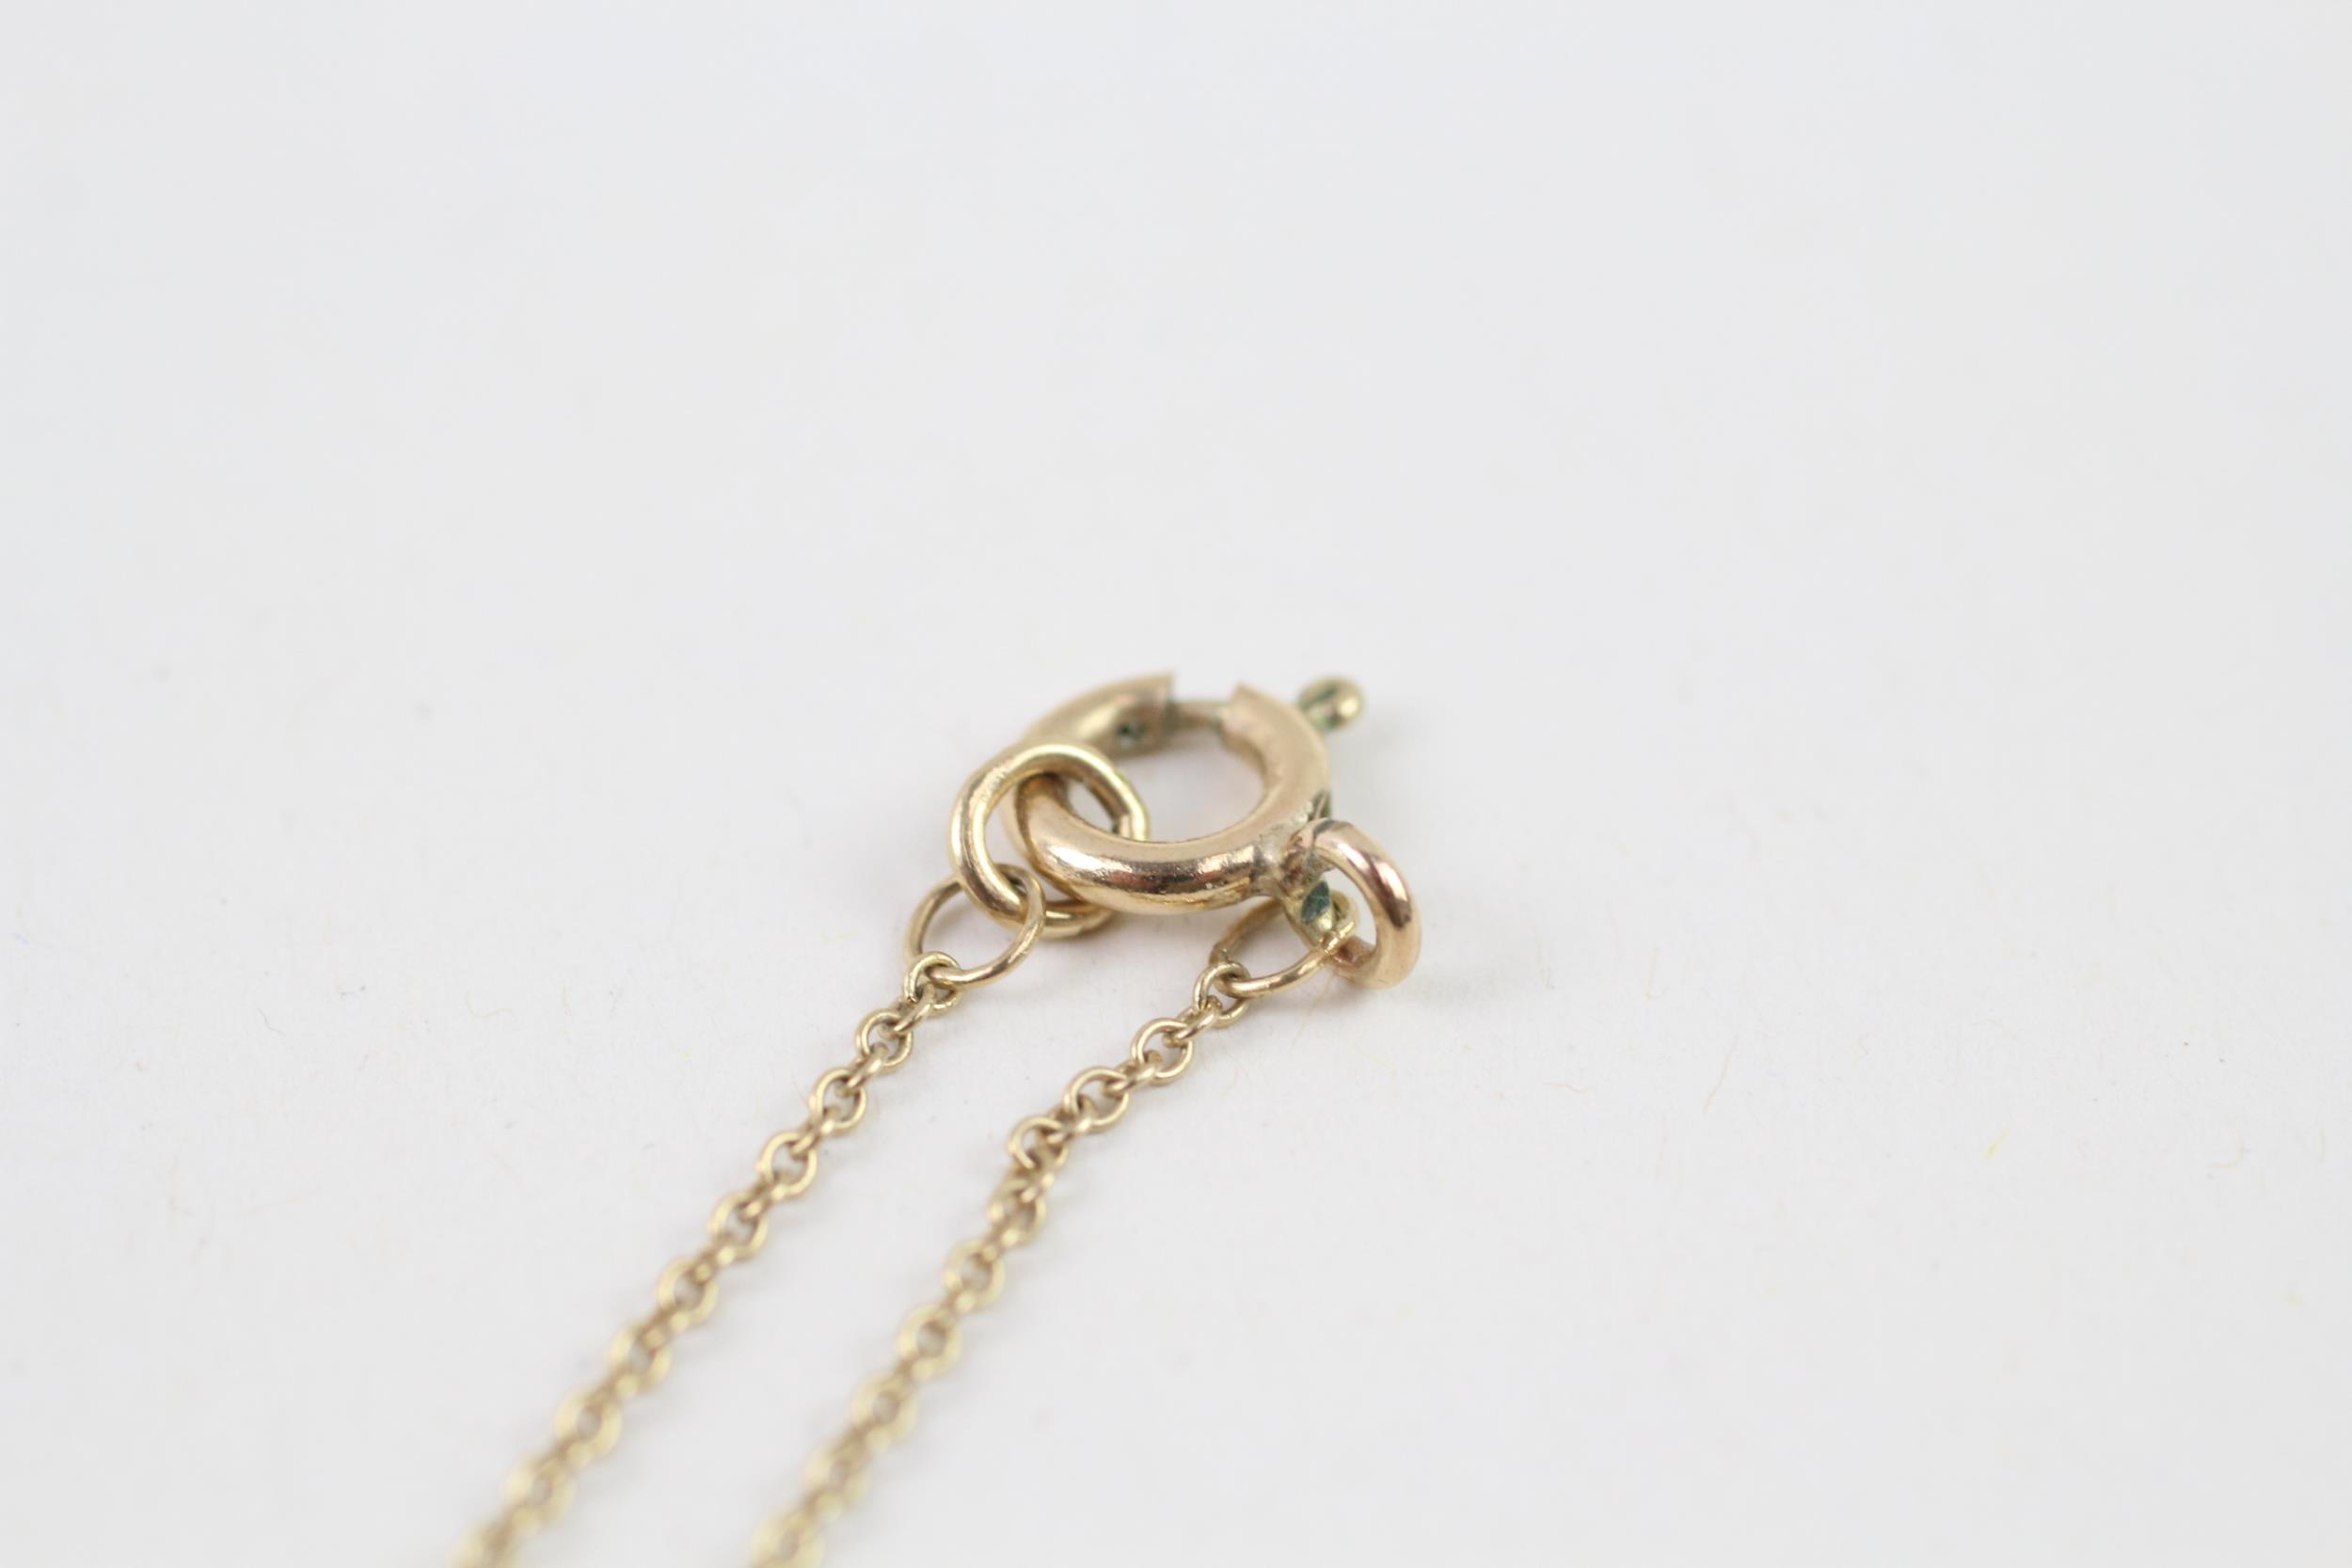 9ct gold citrine round single stone pendant necklace (10.4g) - Image 5 of 6